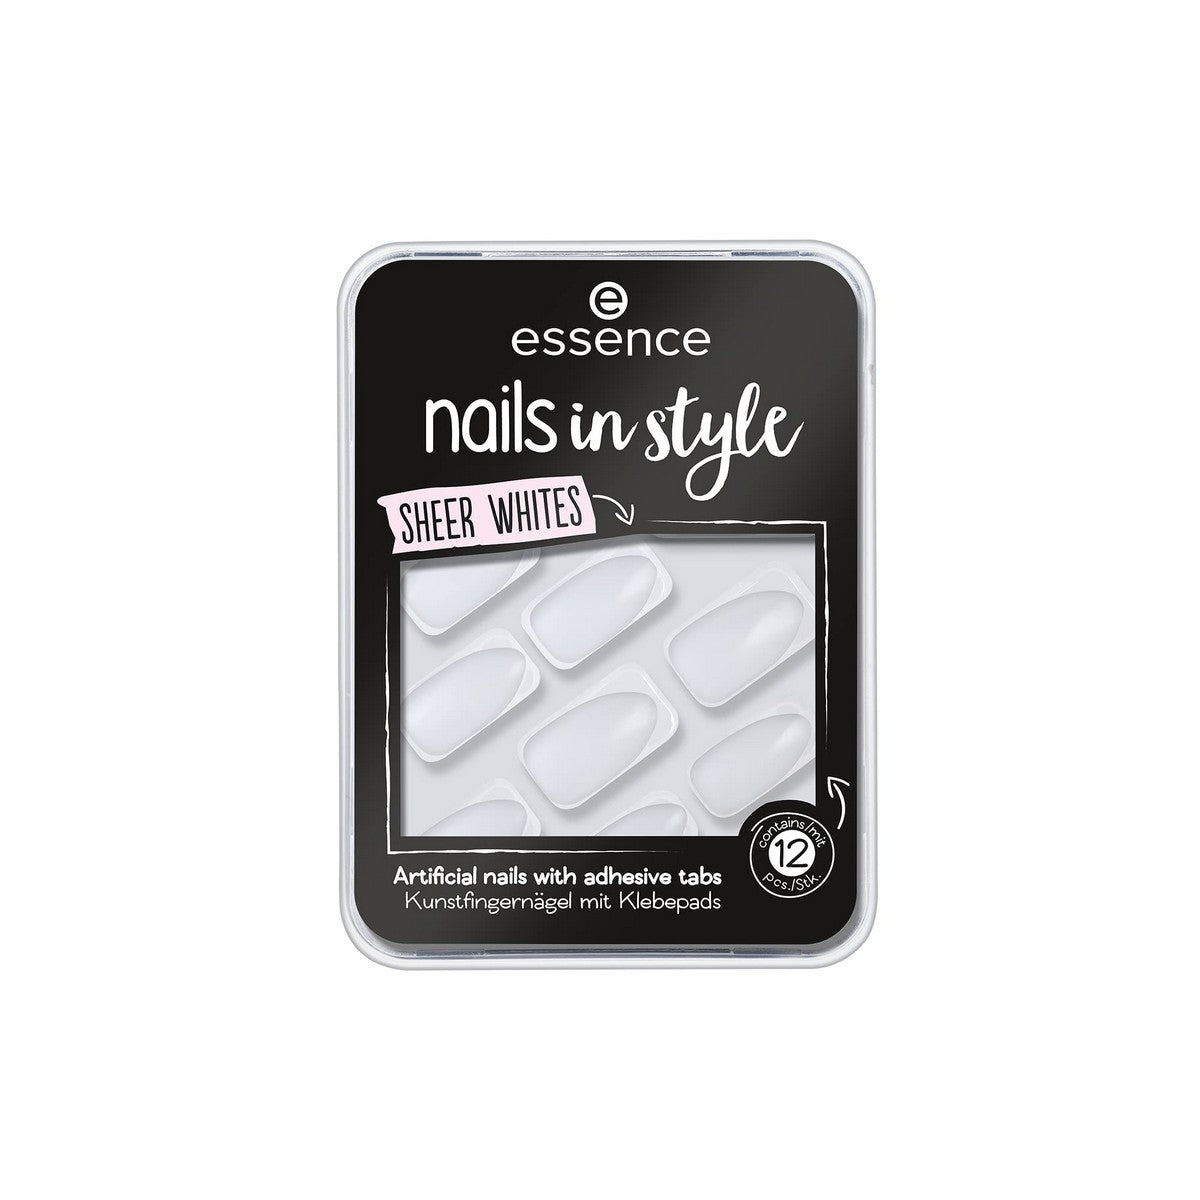 Fals Nails Essence Nails in Style 11-Sheer Whites 12 unități